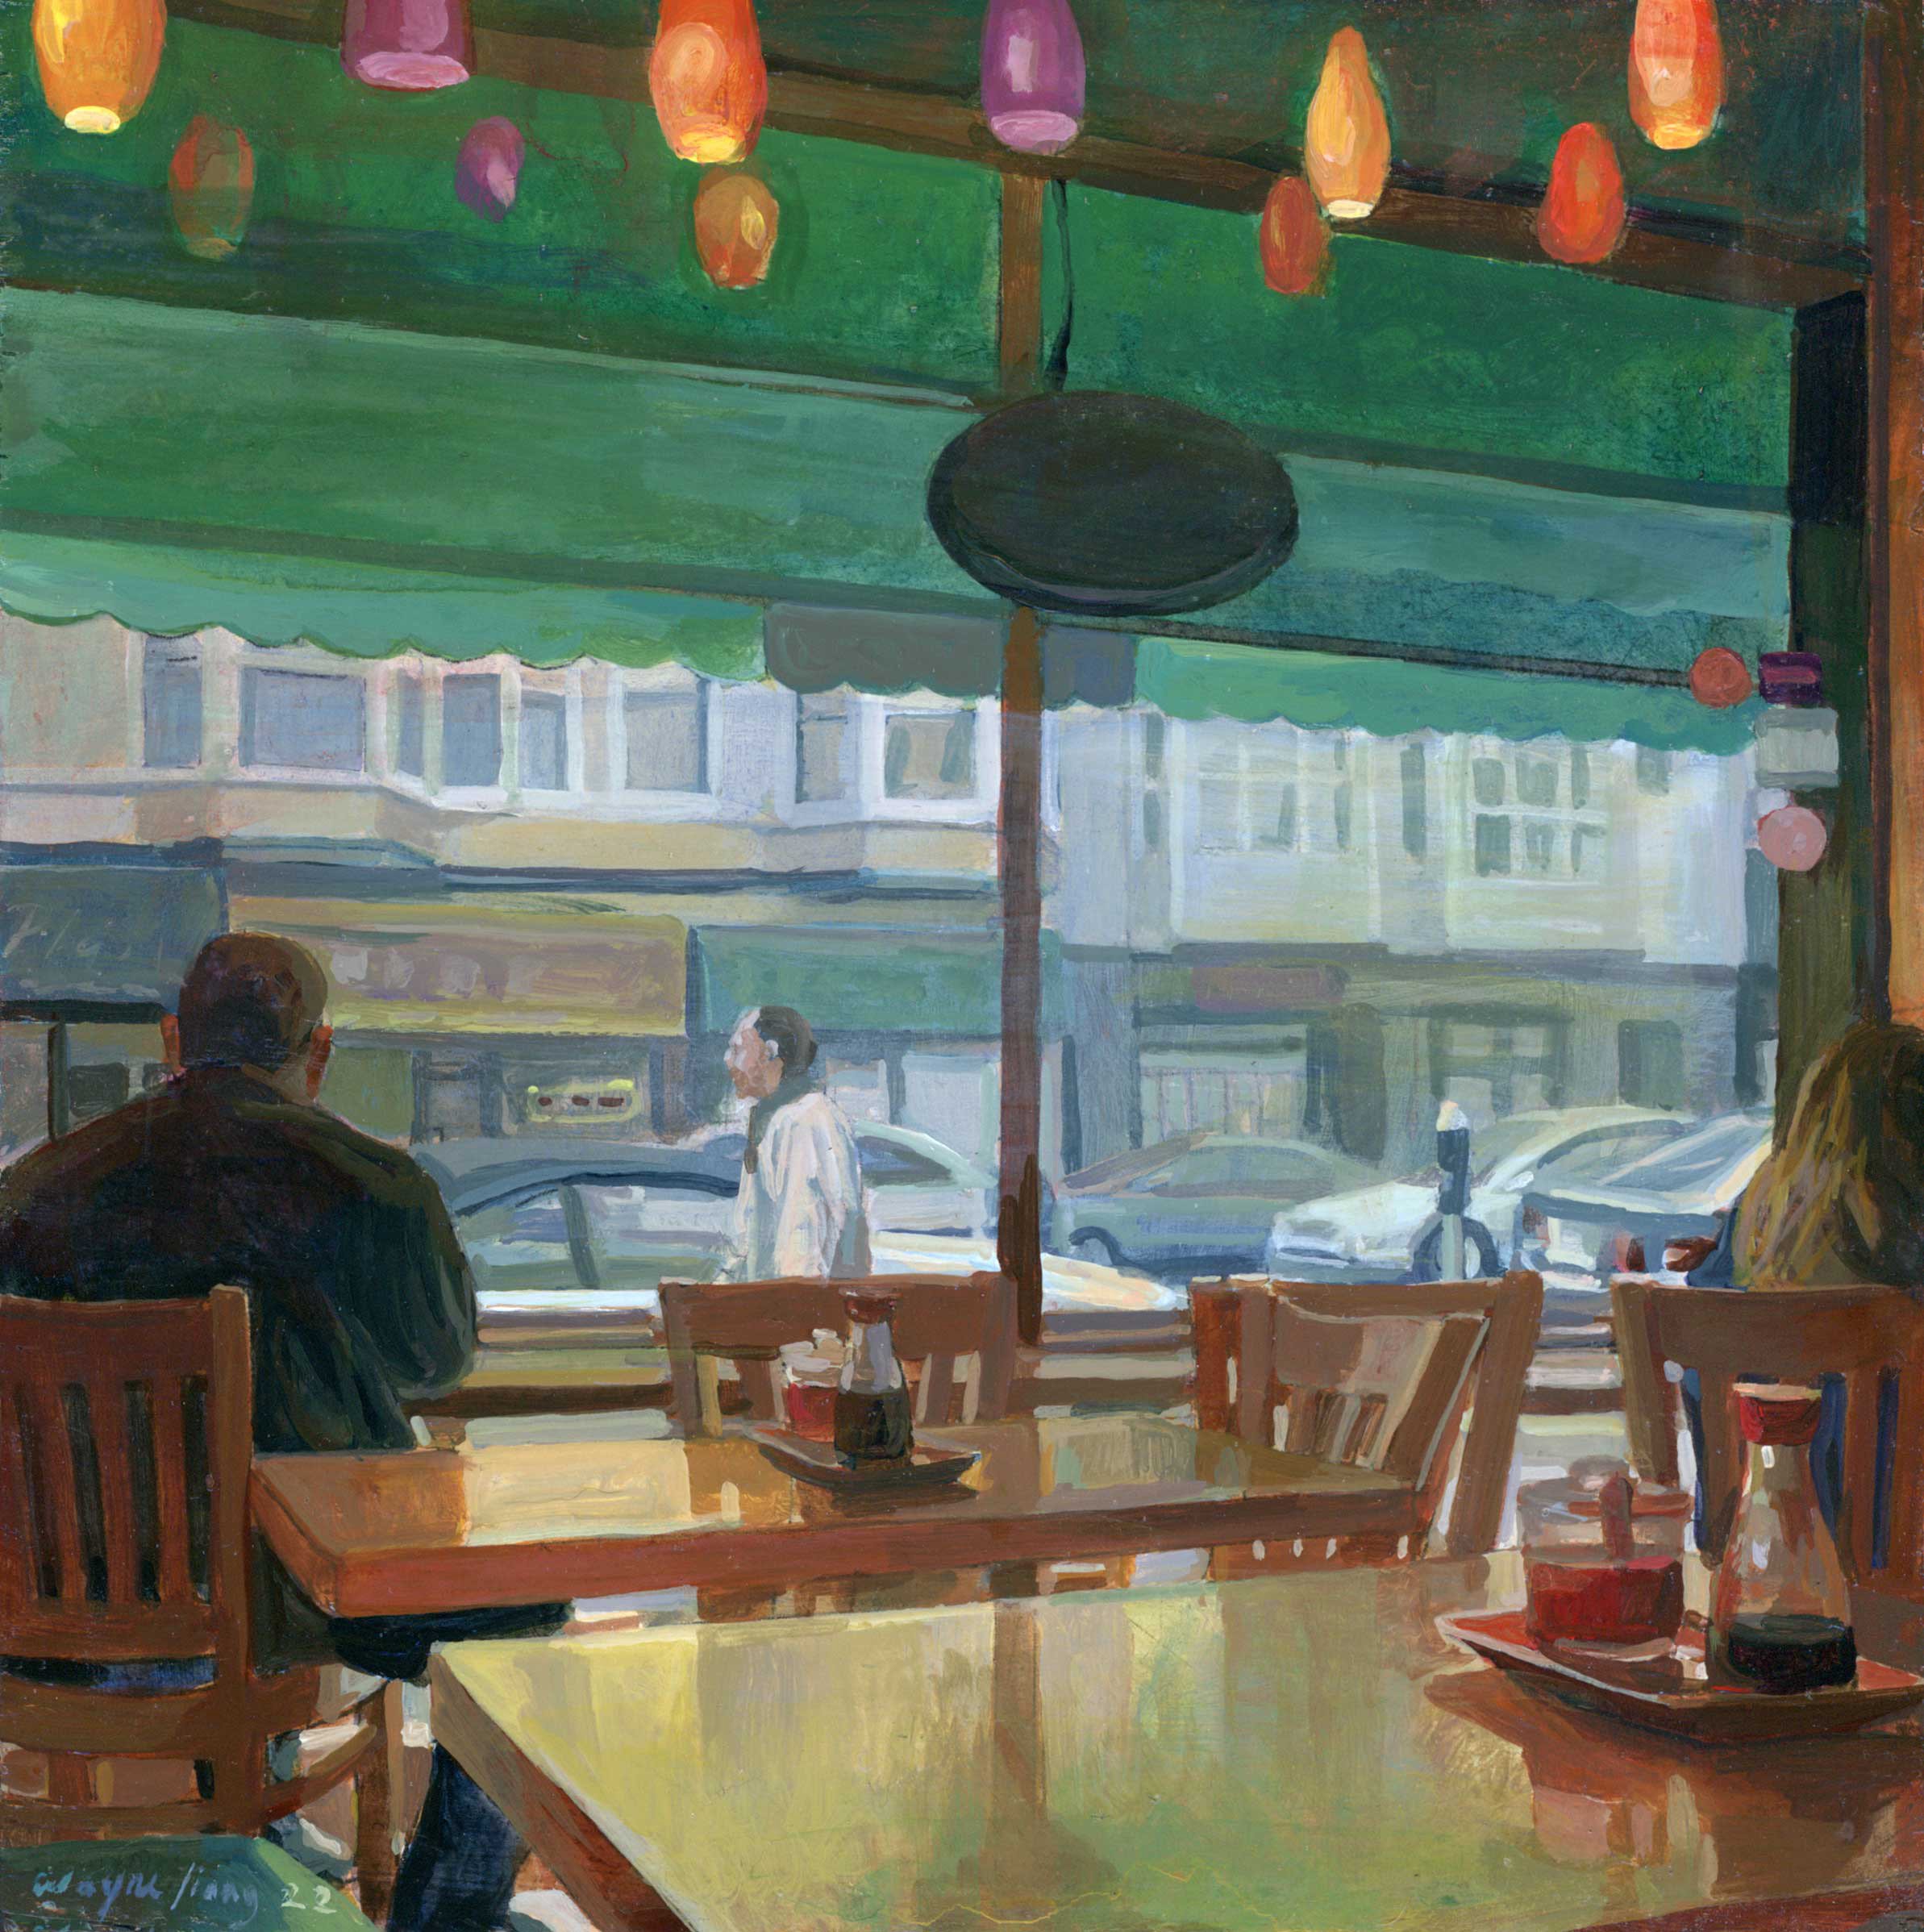 Restaurant Window to the Street by Wayne Jiang